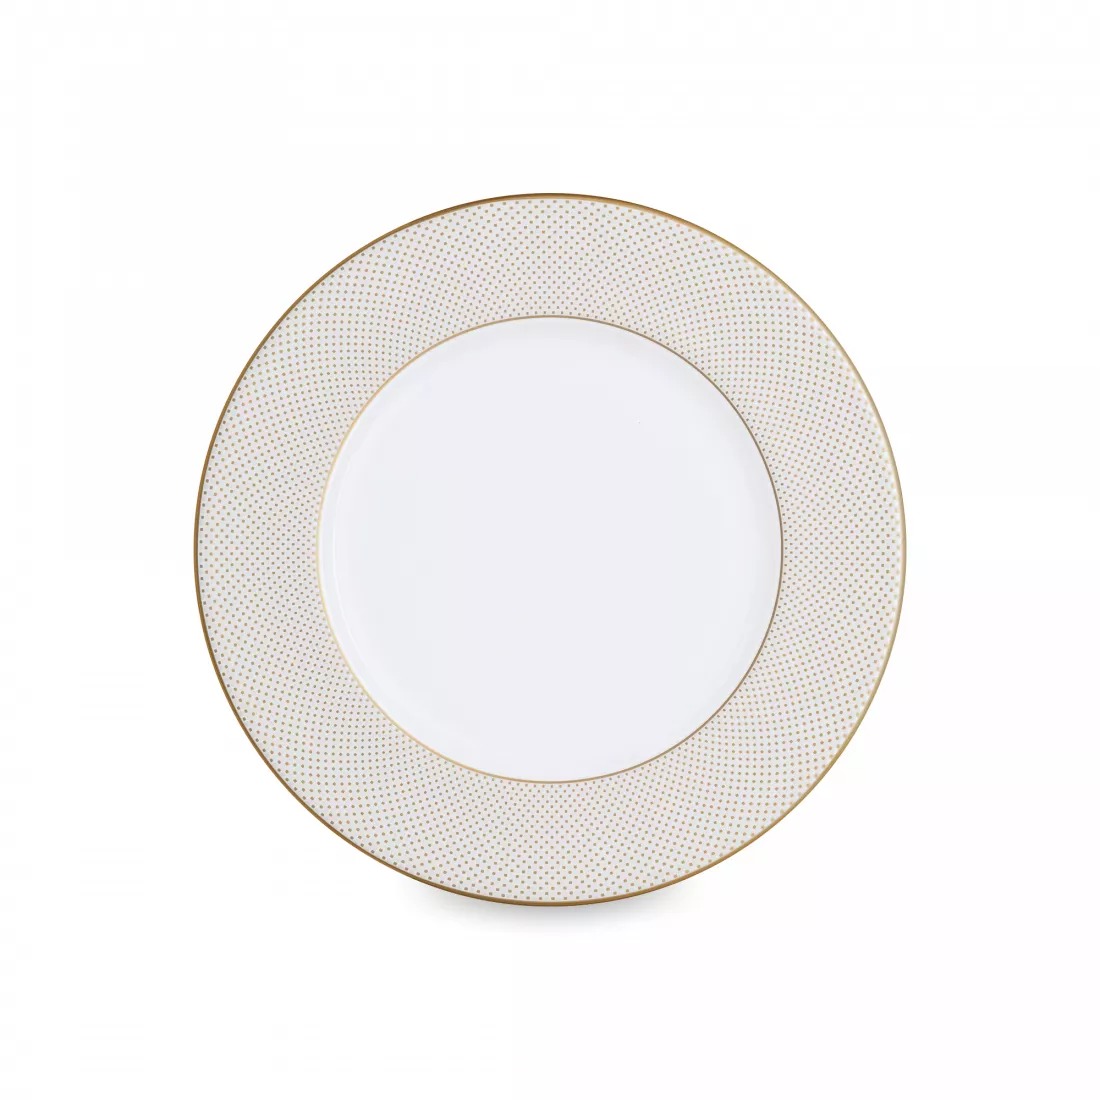 Тарелка пирожковая Narumi Золотая паутина 16 см, фарфор костяной тарелка пирожковая didon 16 см 090116 tunisie porcelaine